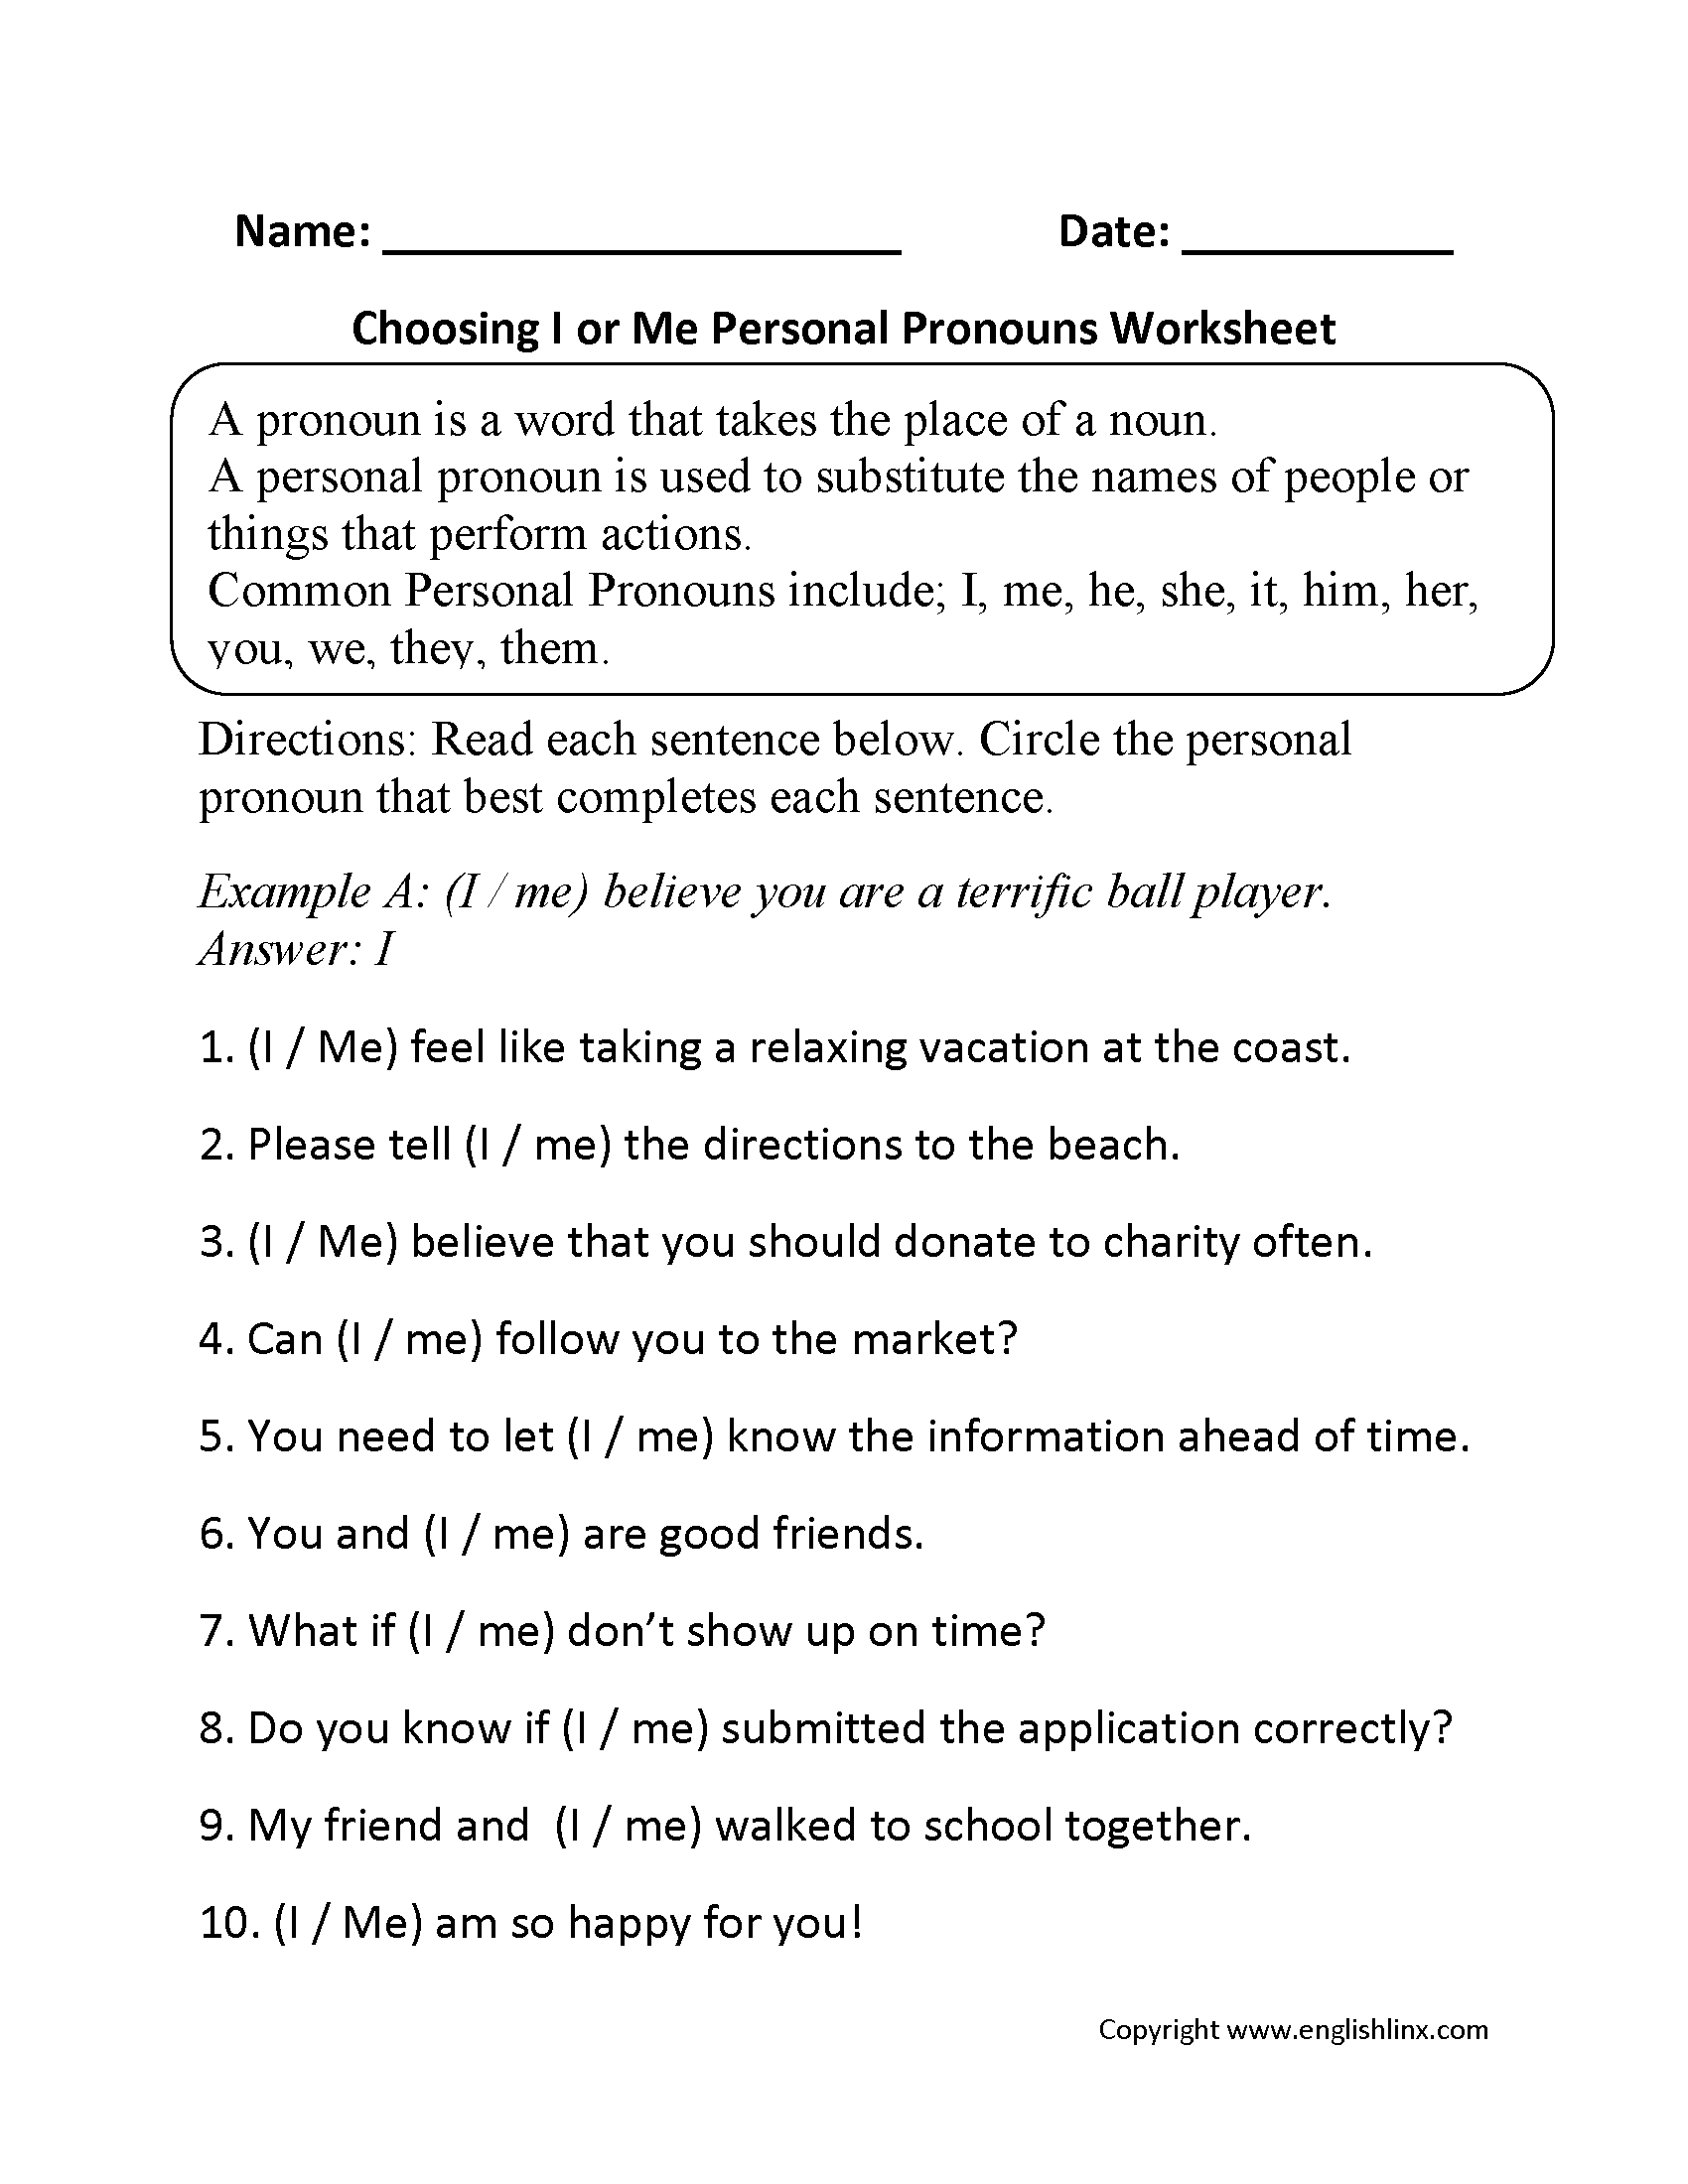 Personal Pronouns Worksheets Choosing I Or Me Personal Pronouns 